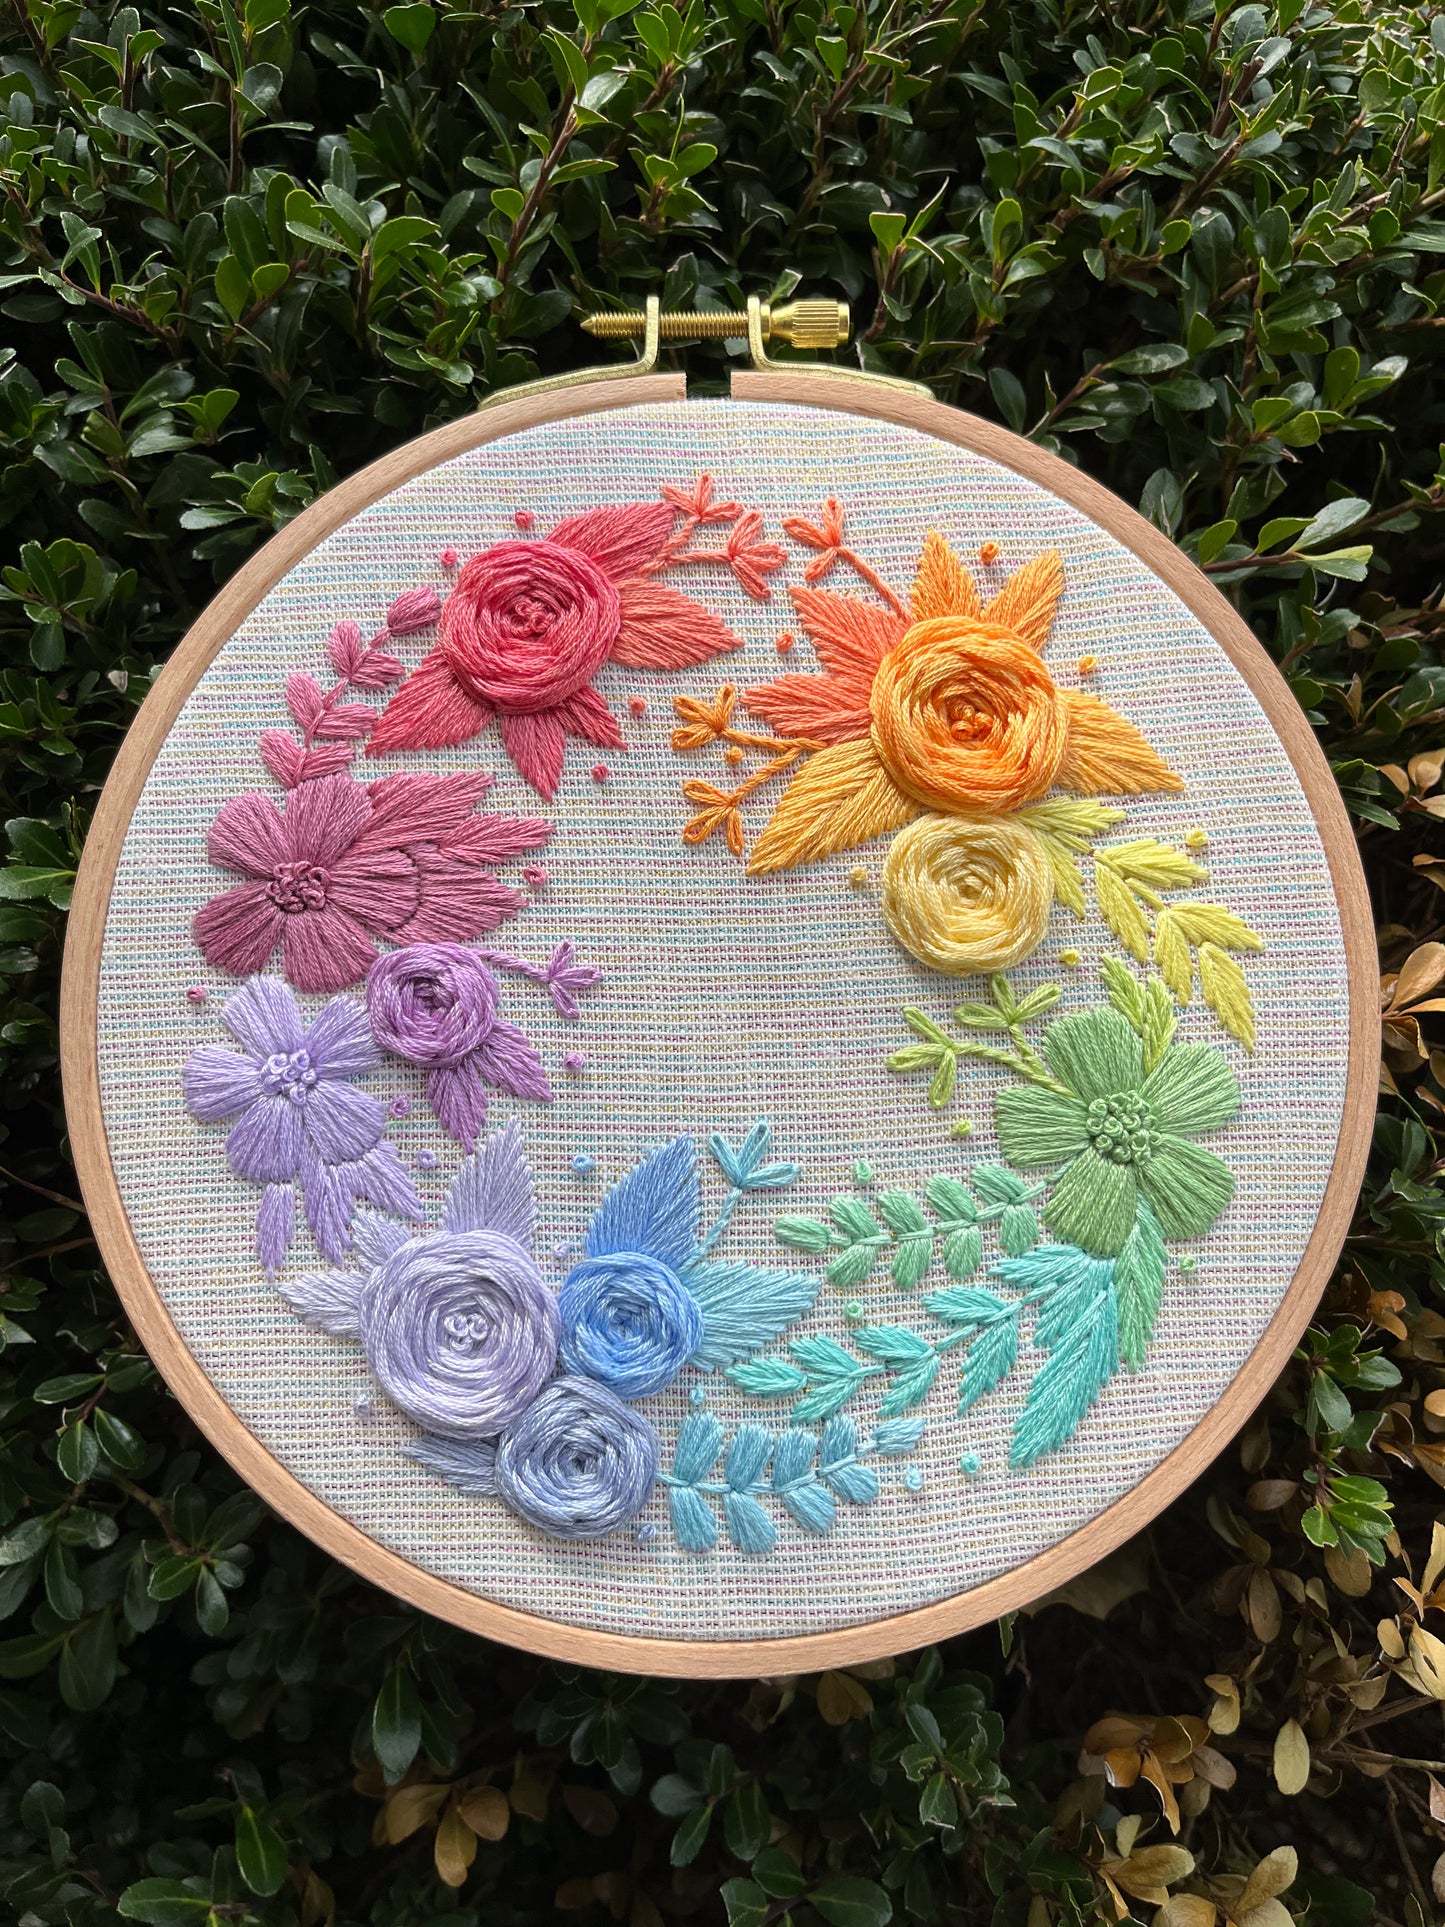 PDF Pattern - Rainbow Wreath, Intermediate Pastel Floral Wreath Embroidery Pattern